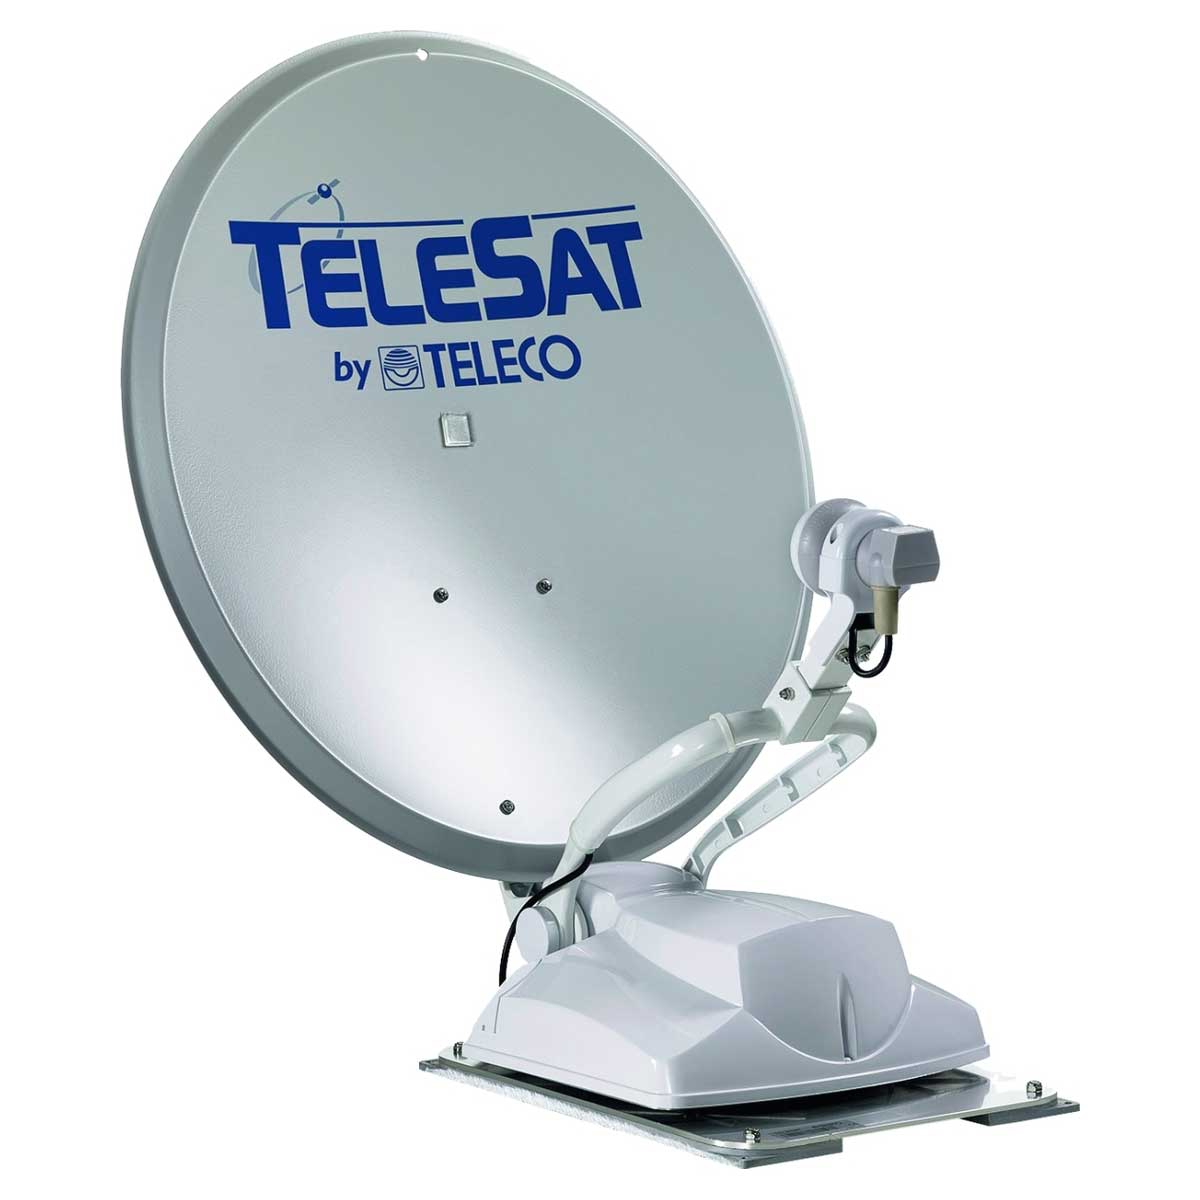 TELECO DVB-S2 Satellitenanlage Telesat BT 65 - 820063